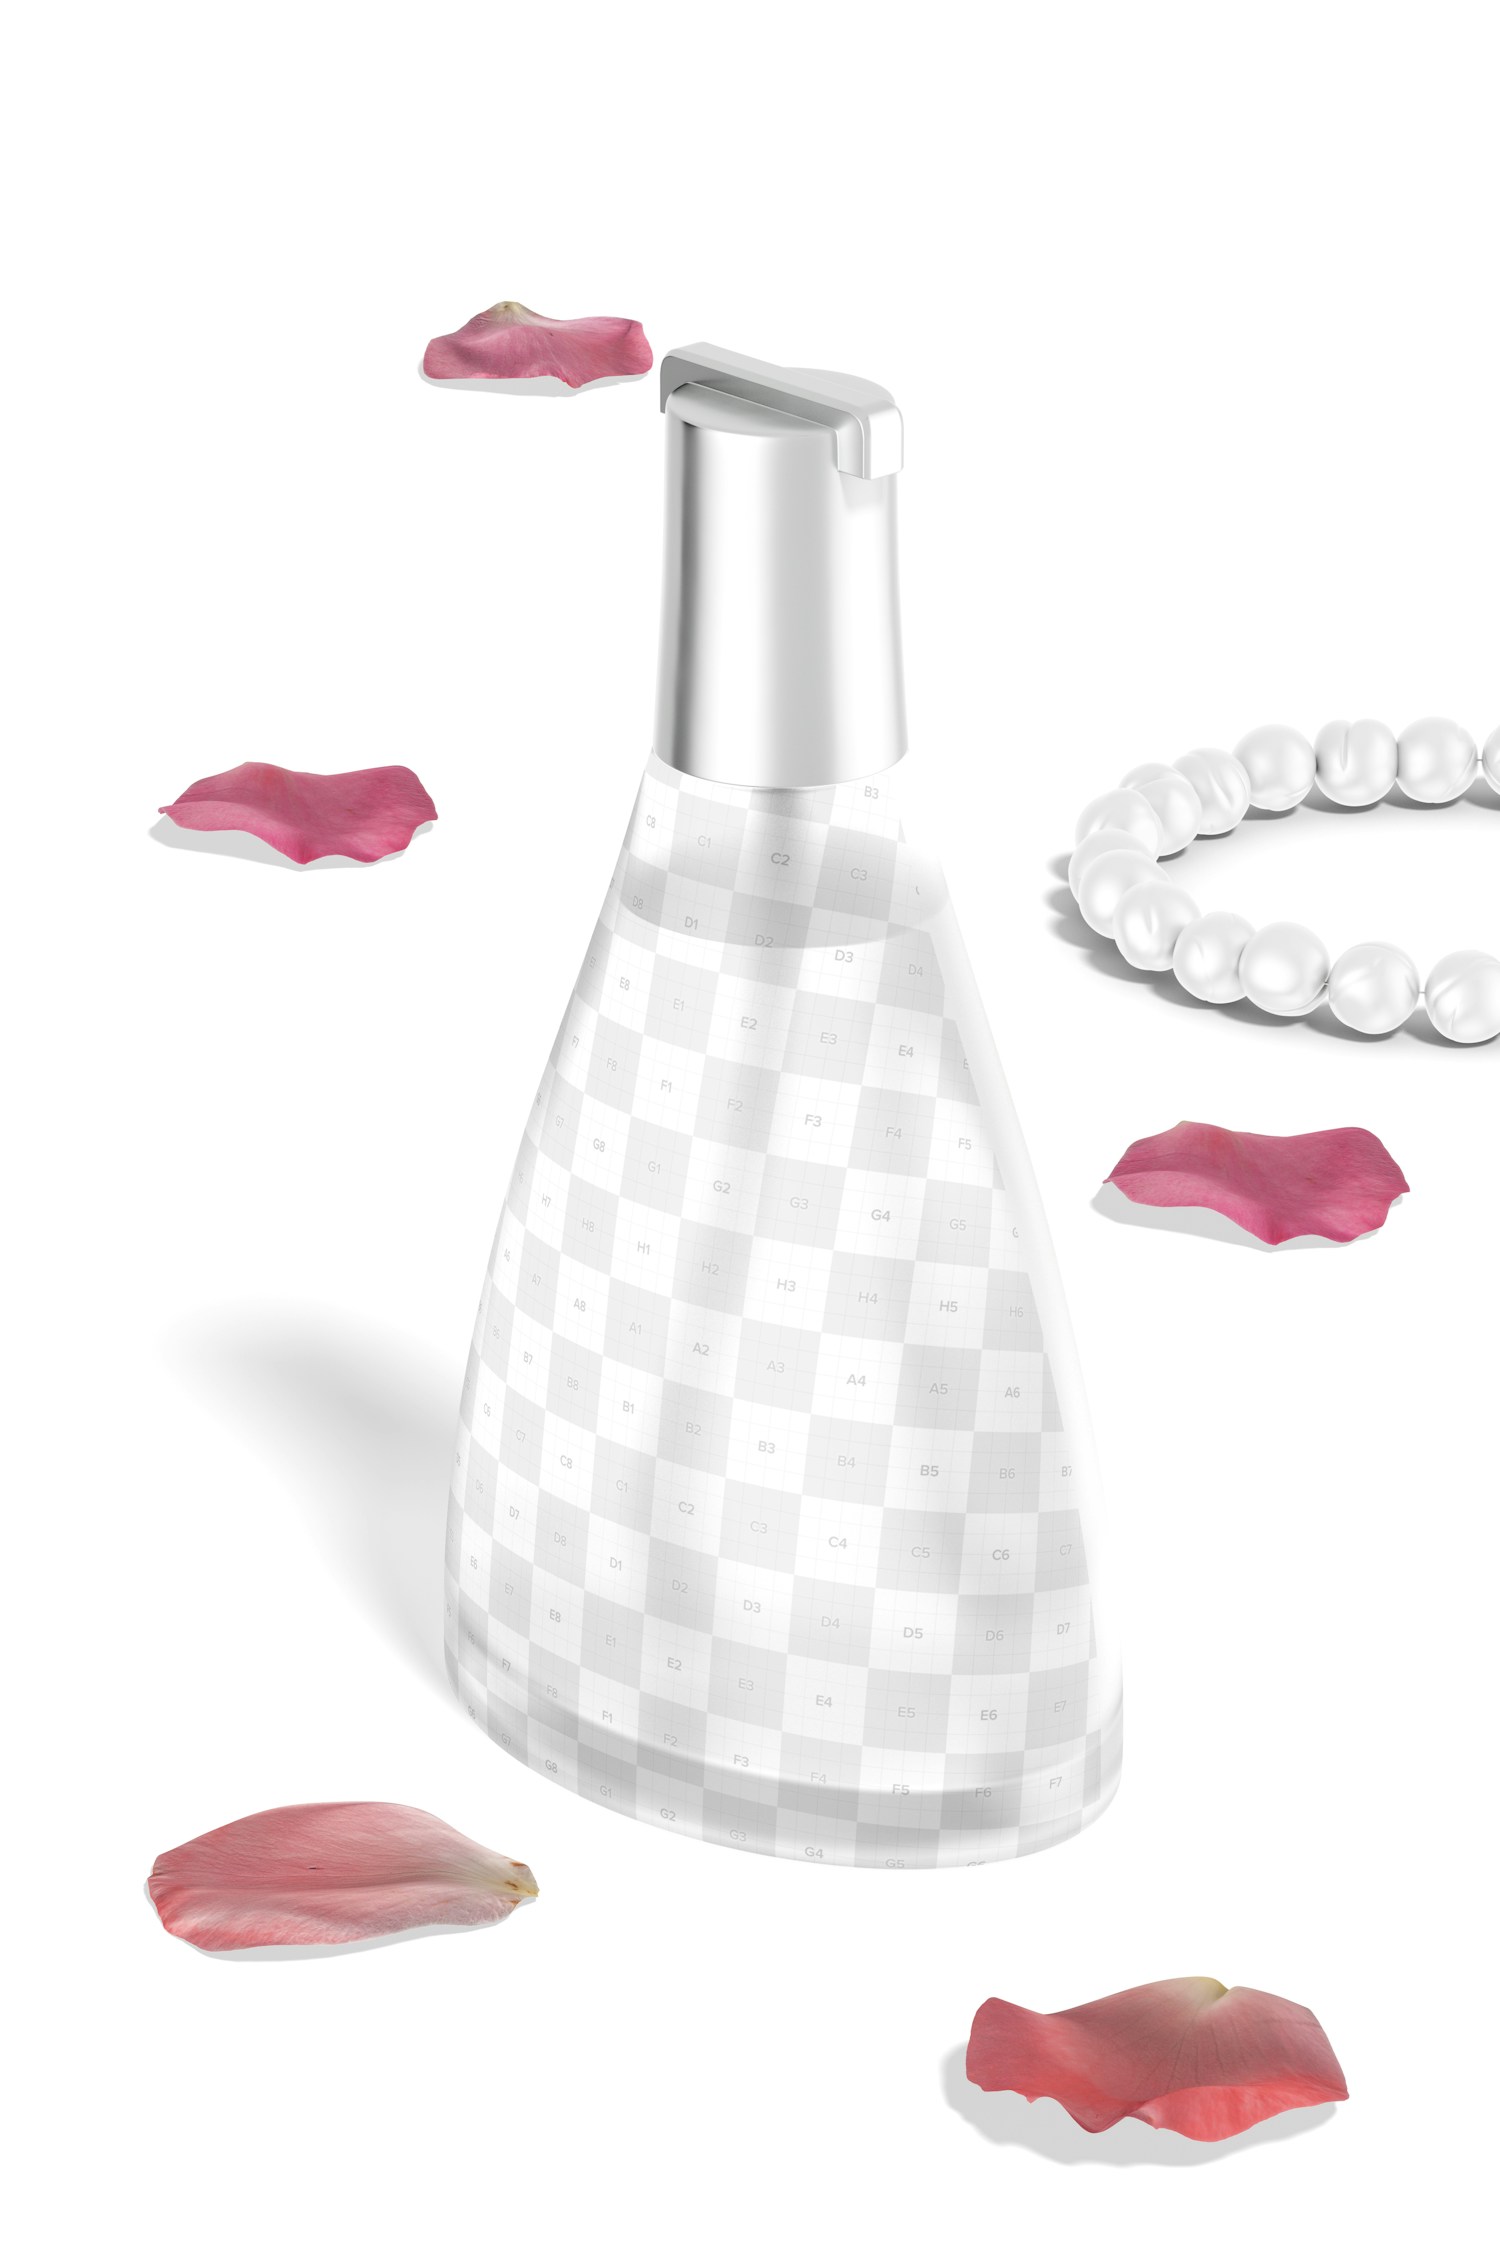 Triangular Luxury Perfume Bottles Mockup, Perspective